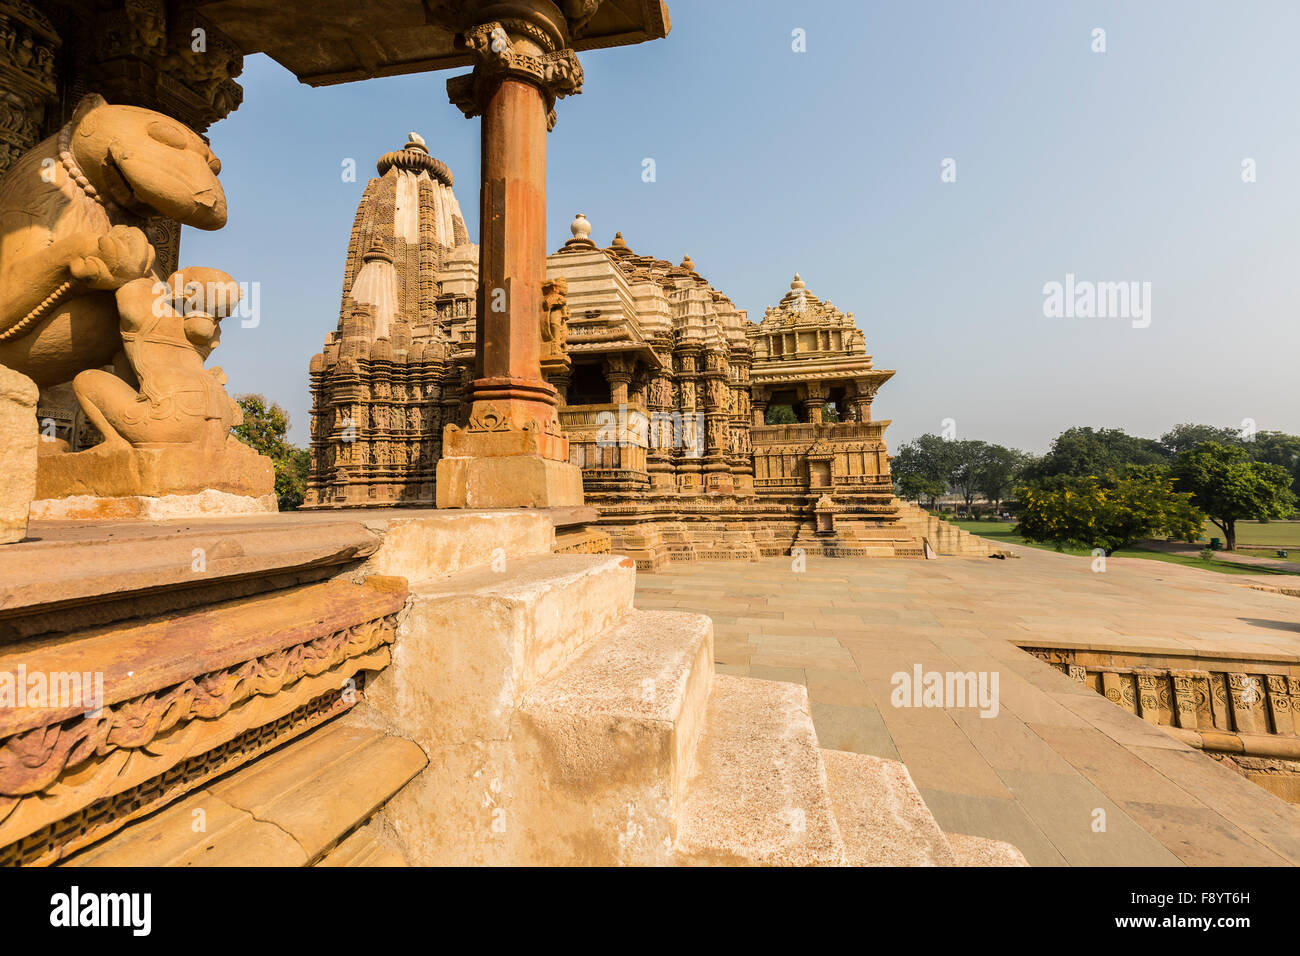 The UNESCO recognised temples in Khajuraho, Madhya Pradesh, India Stock Photo